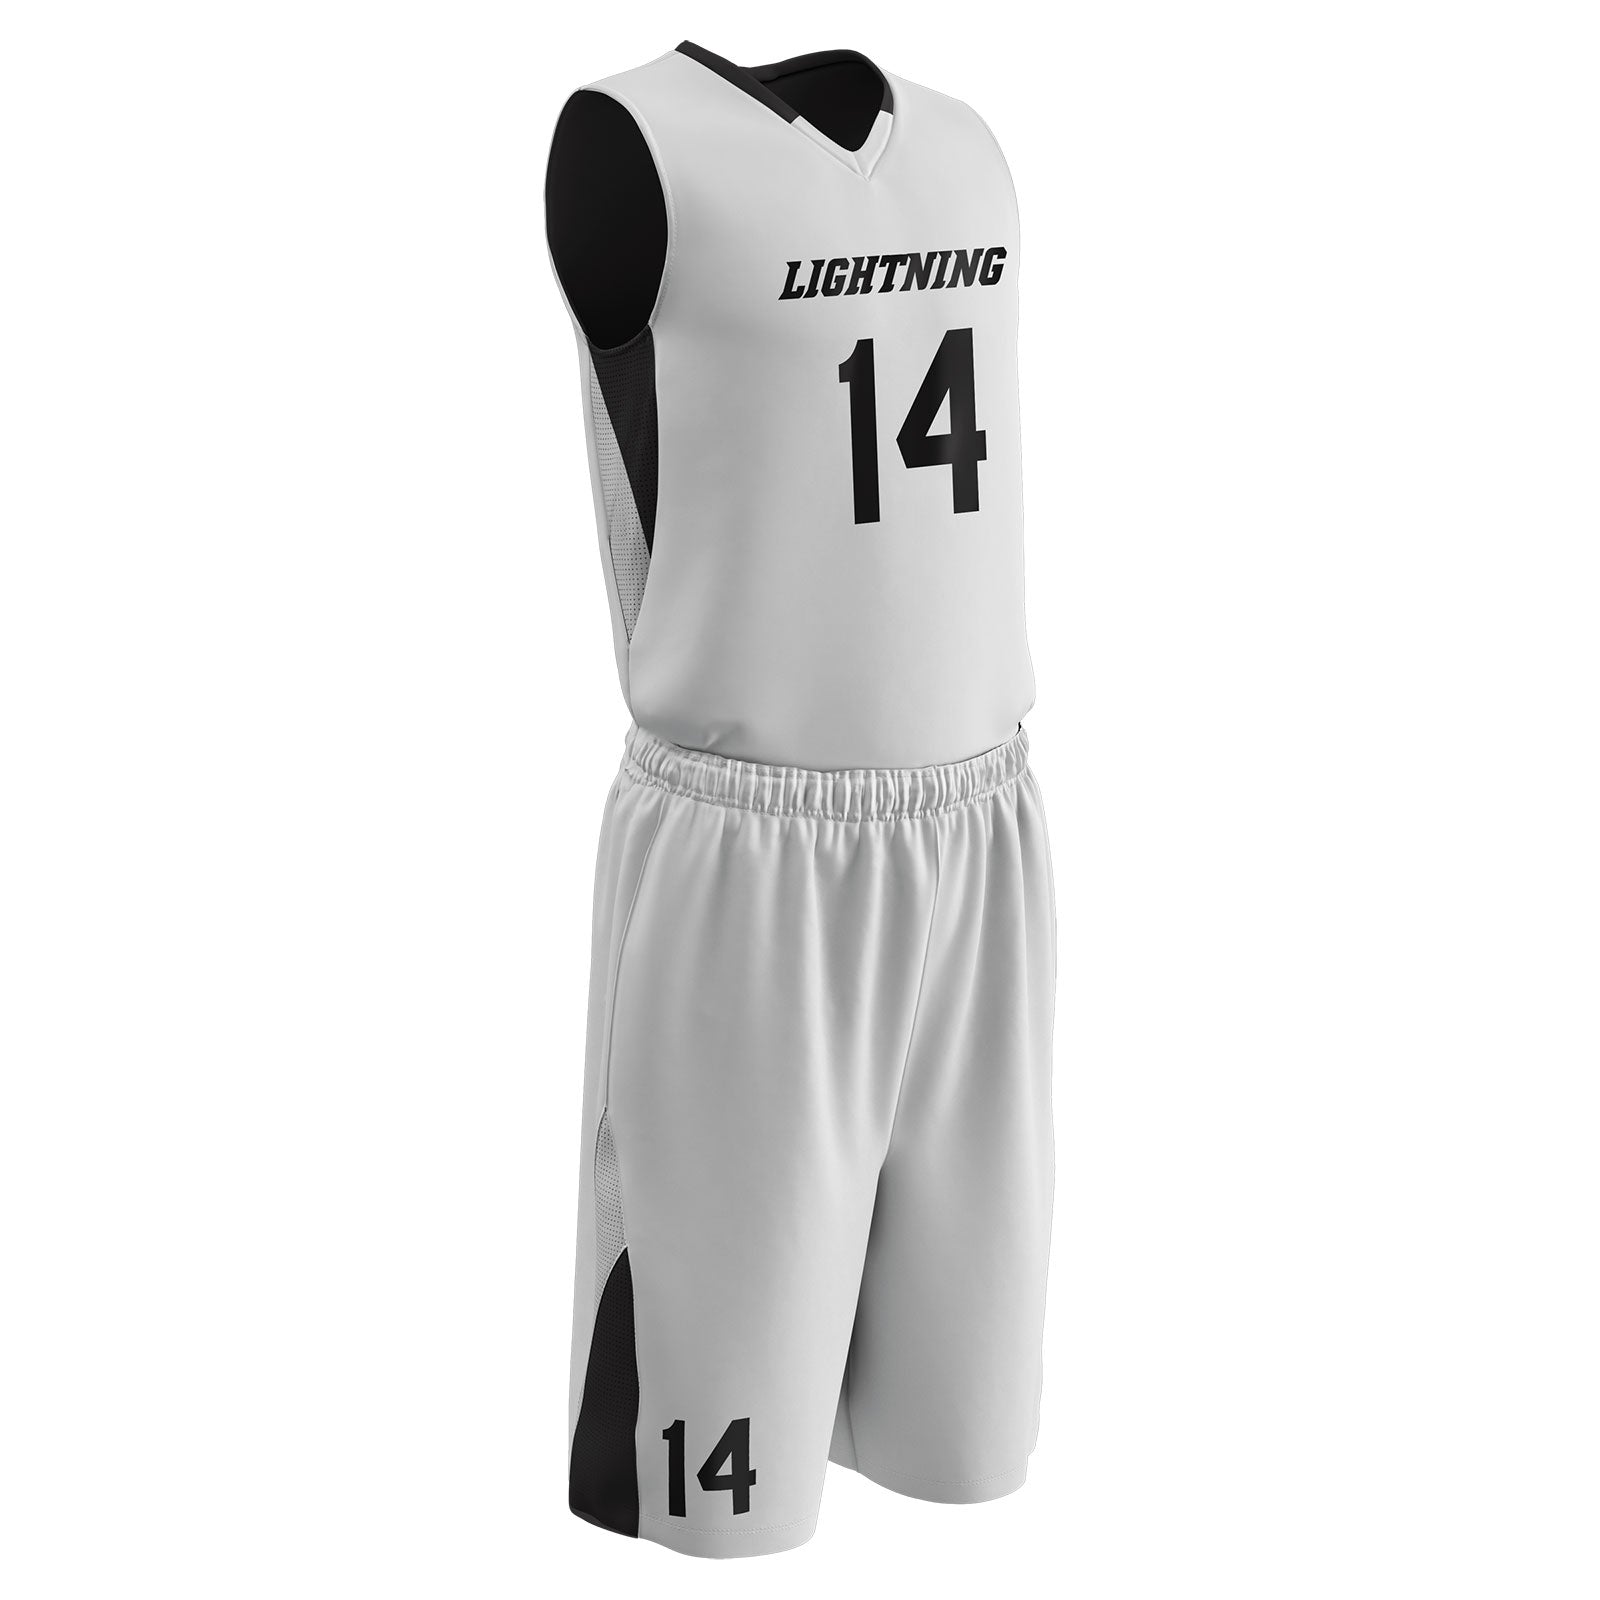  [10 Pack] Reversible Mens Mesh Performance Athletic Basketball  Jerseys - Adult Team Sports Bulk (Black/White), Large, XL, XXL, Black/White  : Sports & Outdoors